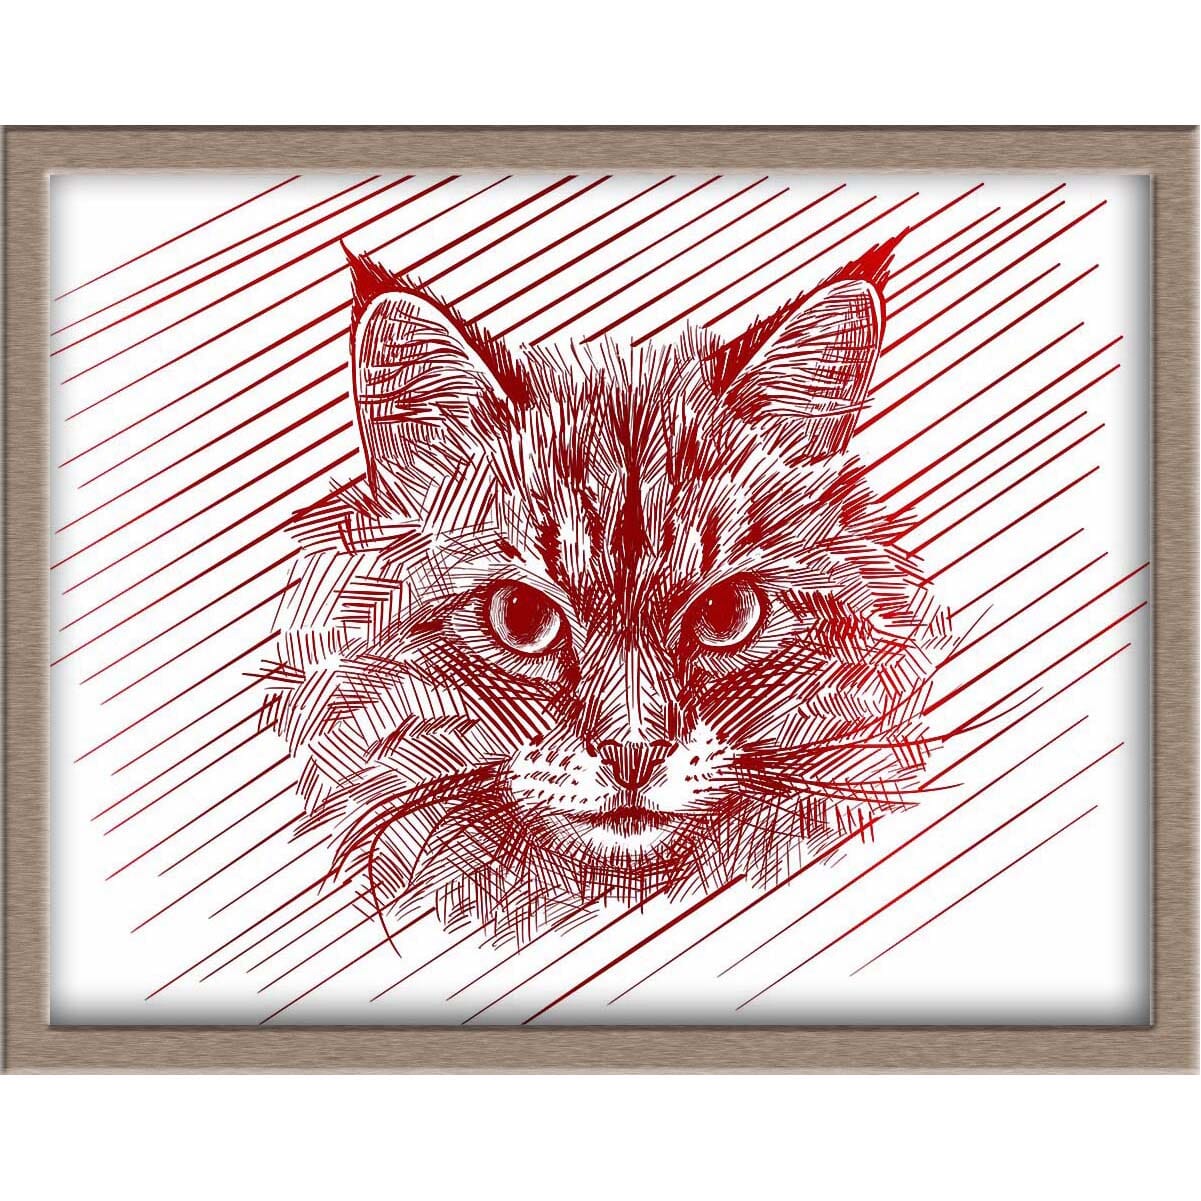 Siberian Cat Foiled Print (Smokey) Posters, Prints, & Visual Artwork JoyousJoyfulJoyness 